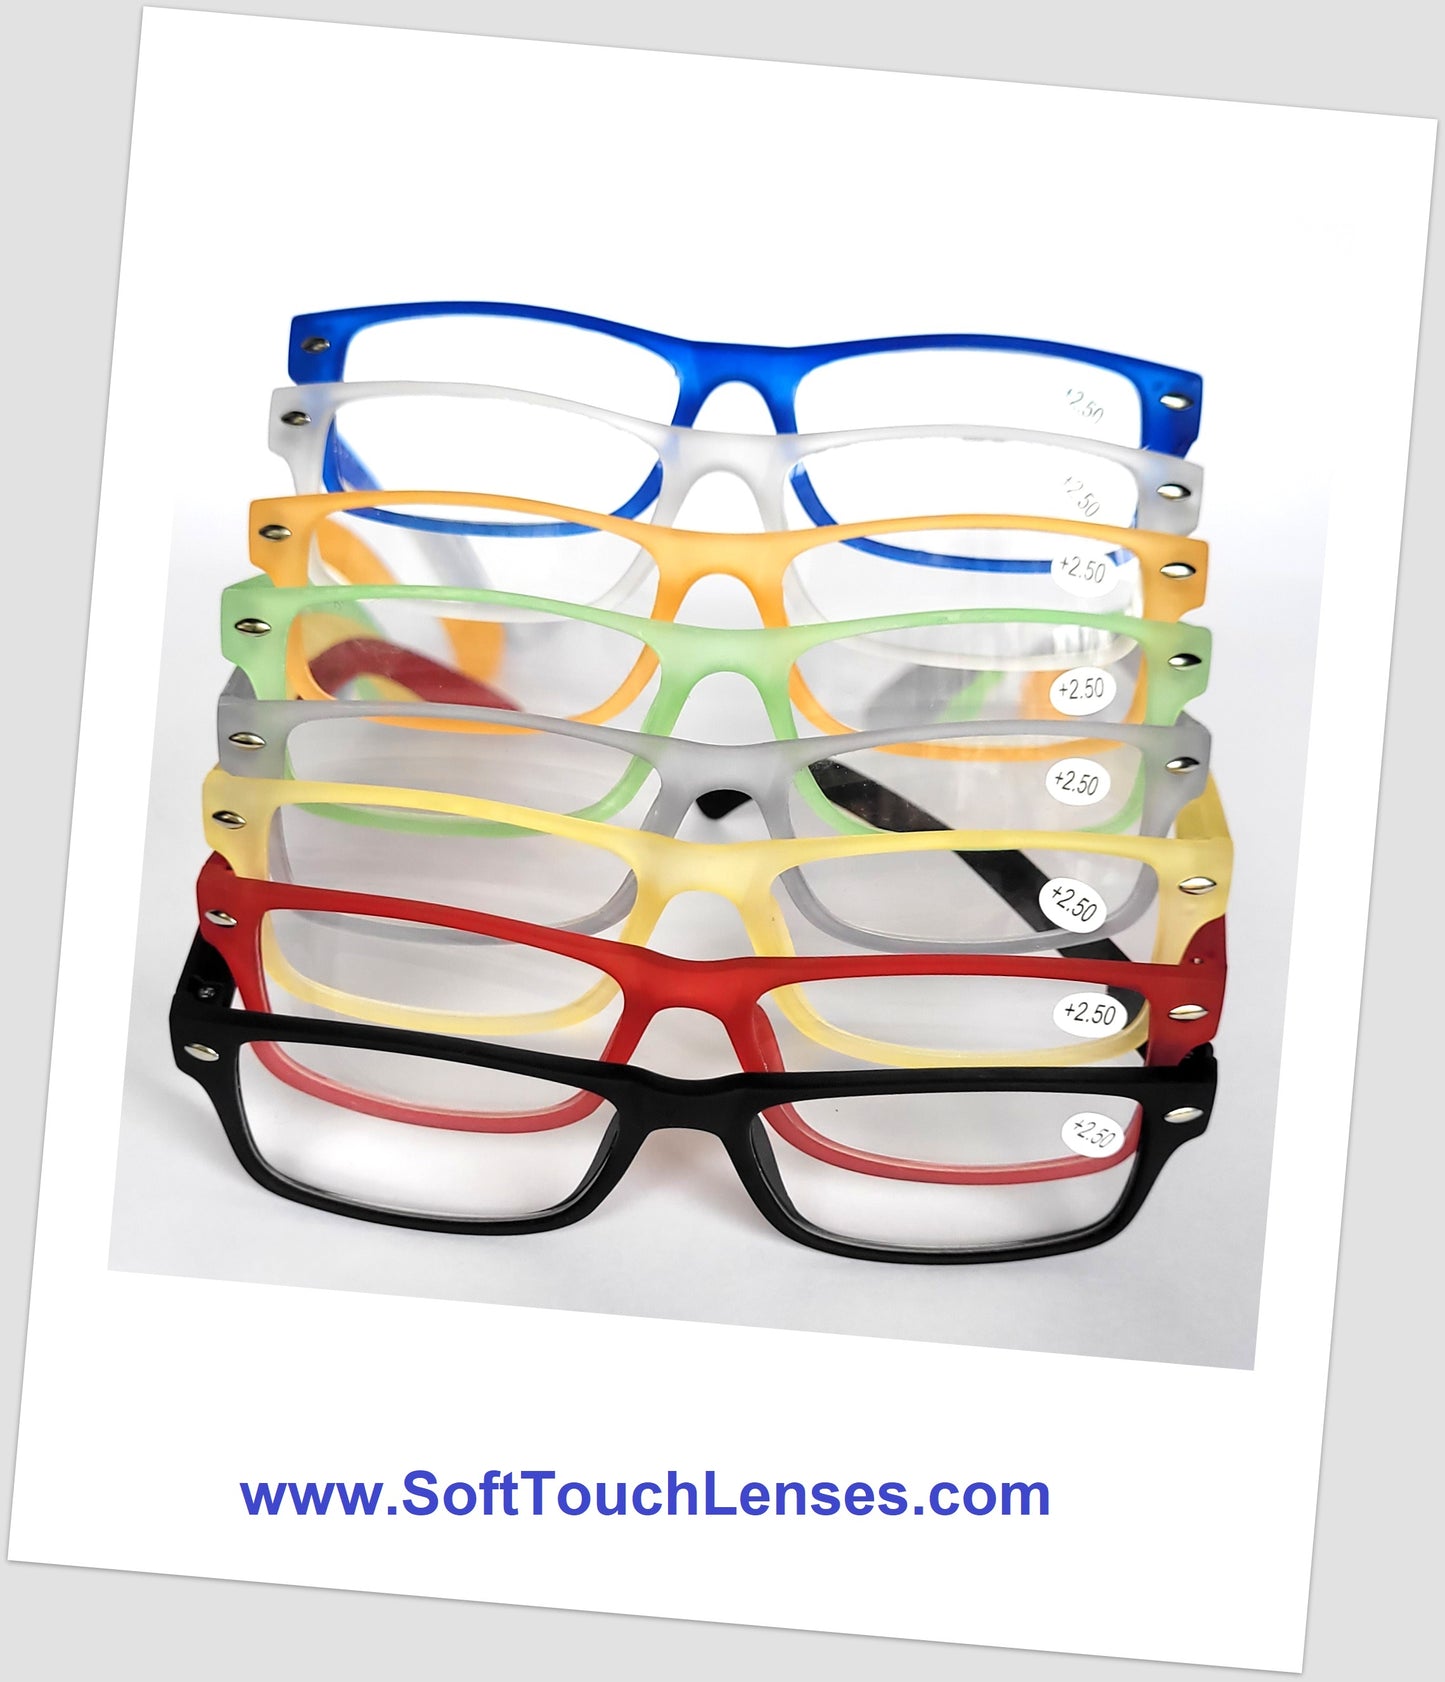 Affaires Orange Reading Glasses For Men & Women Innovative Scratch Resistant UV Blocking Lenses , vibrant colorsful Design Power Reading Eyeglasses